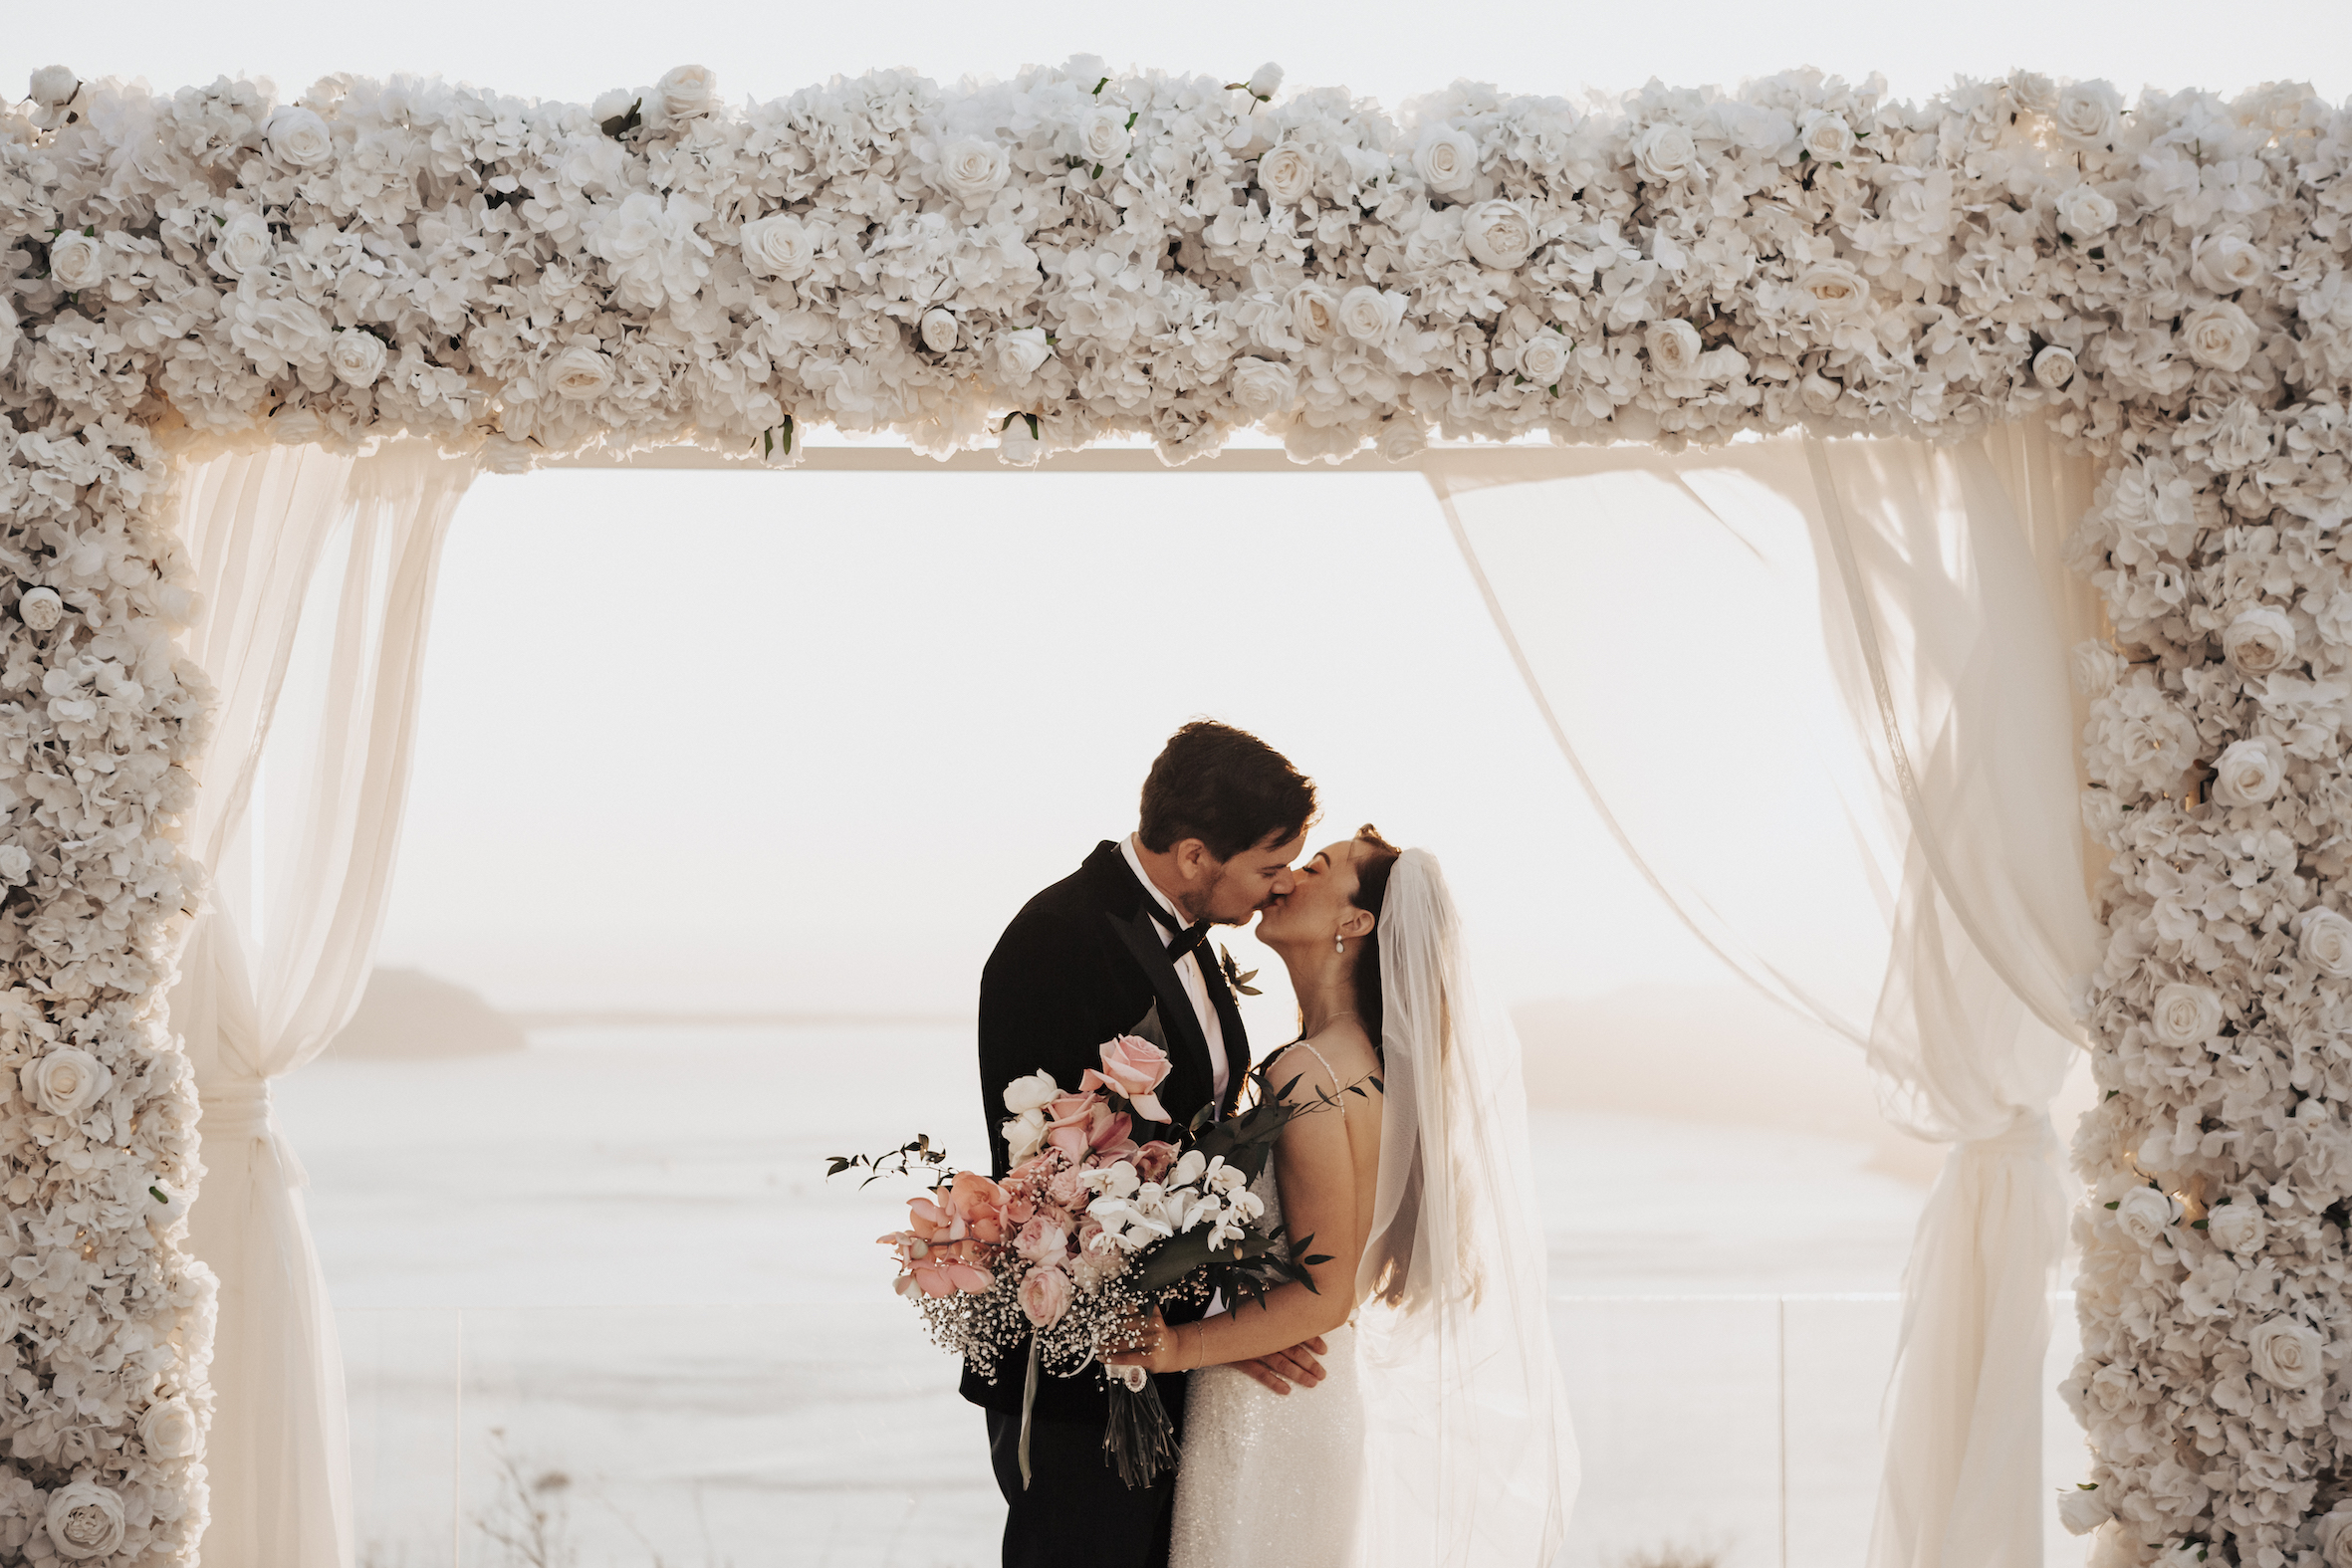 Anneliese and James kiss under white floral arch at Le Ciel wedding Santorini